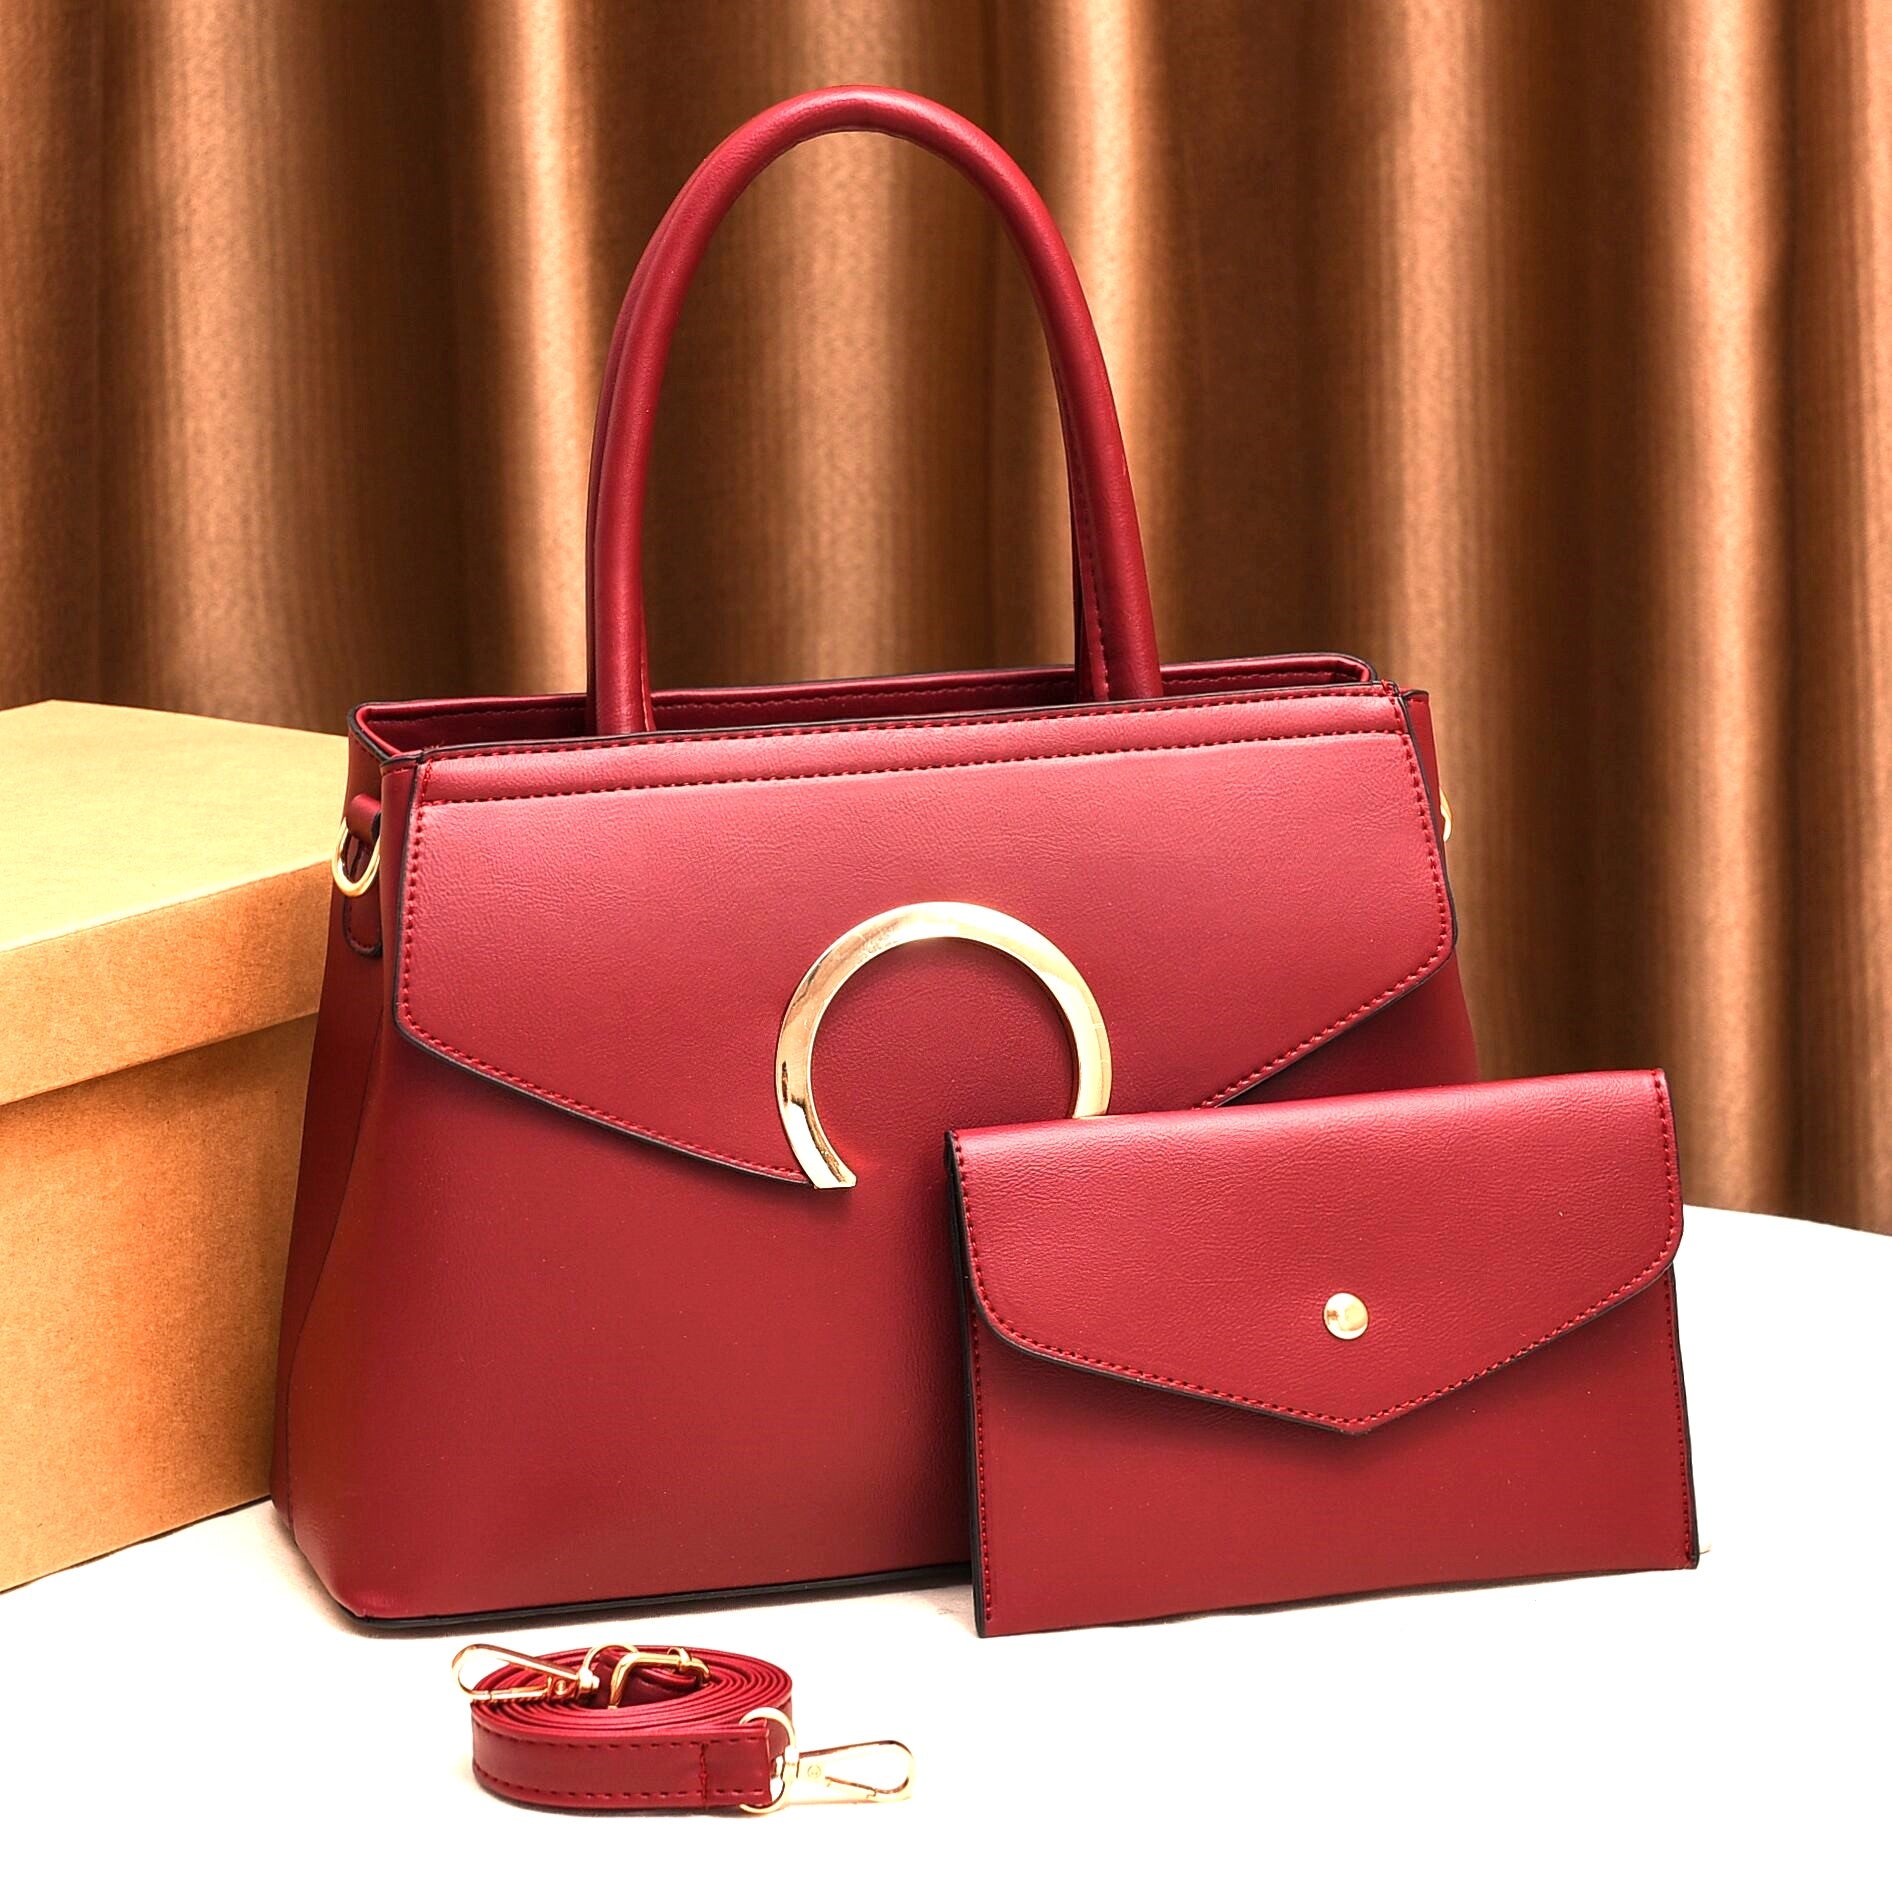 2 in 1 Red Girls Handbag 4242